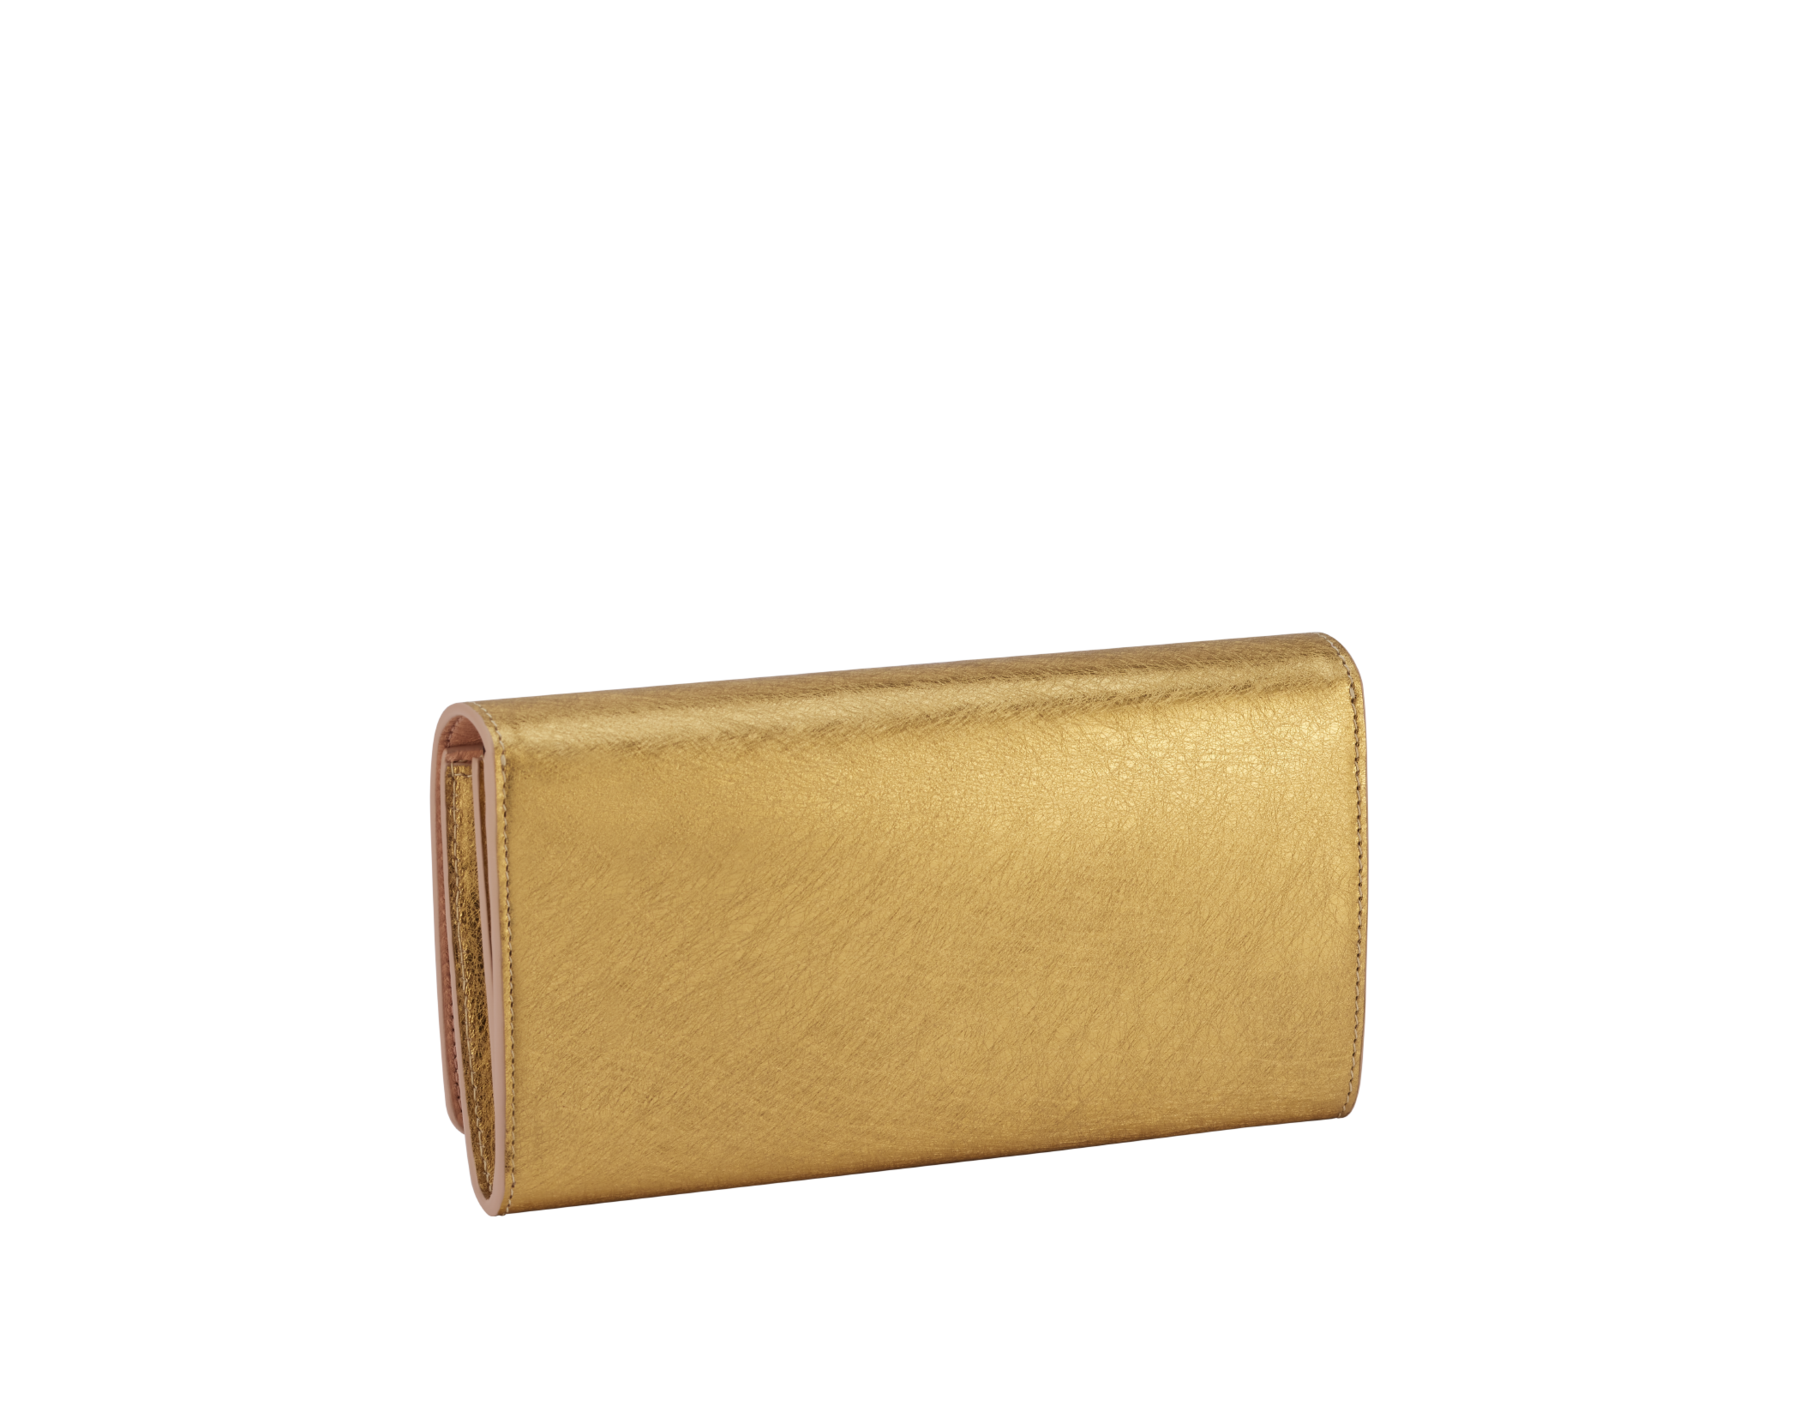 Bvlgari Bvlgari Large Wallet Calf Leather 293979 | Wallets | Bulgari ...